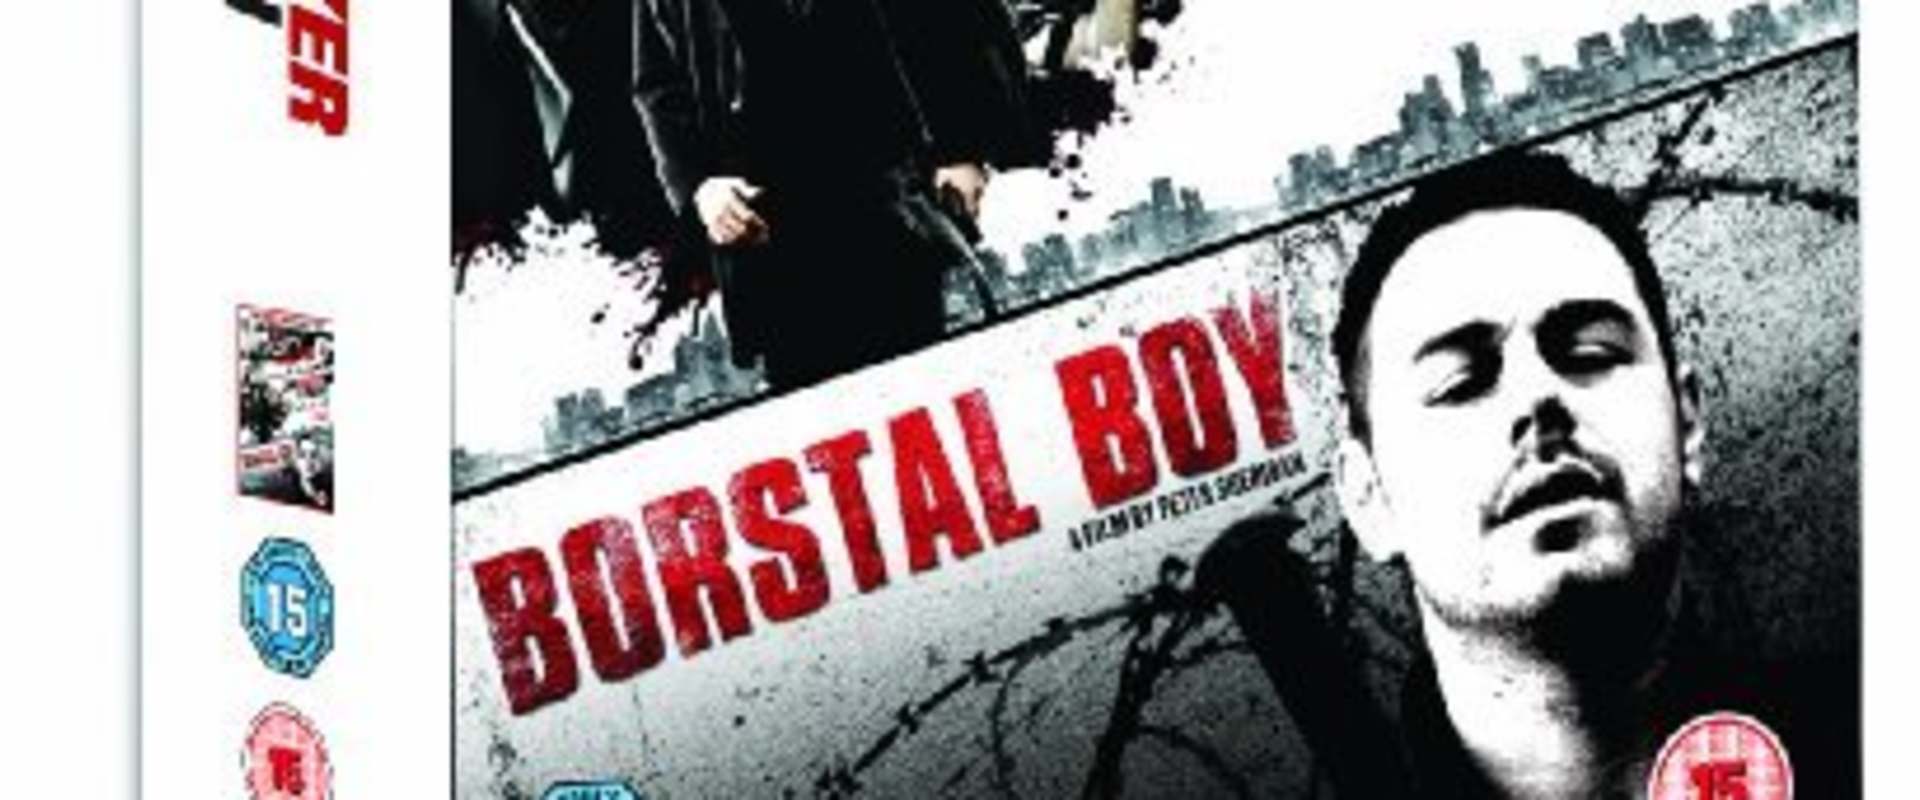 Borstal Boy background 1